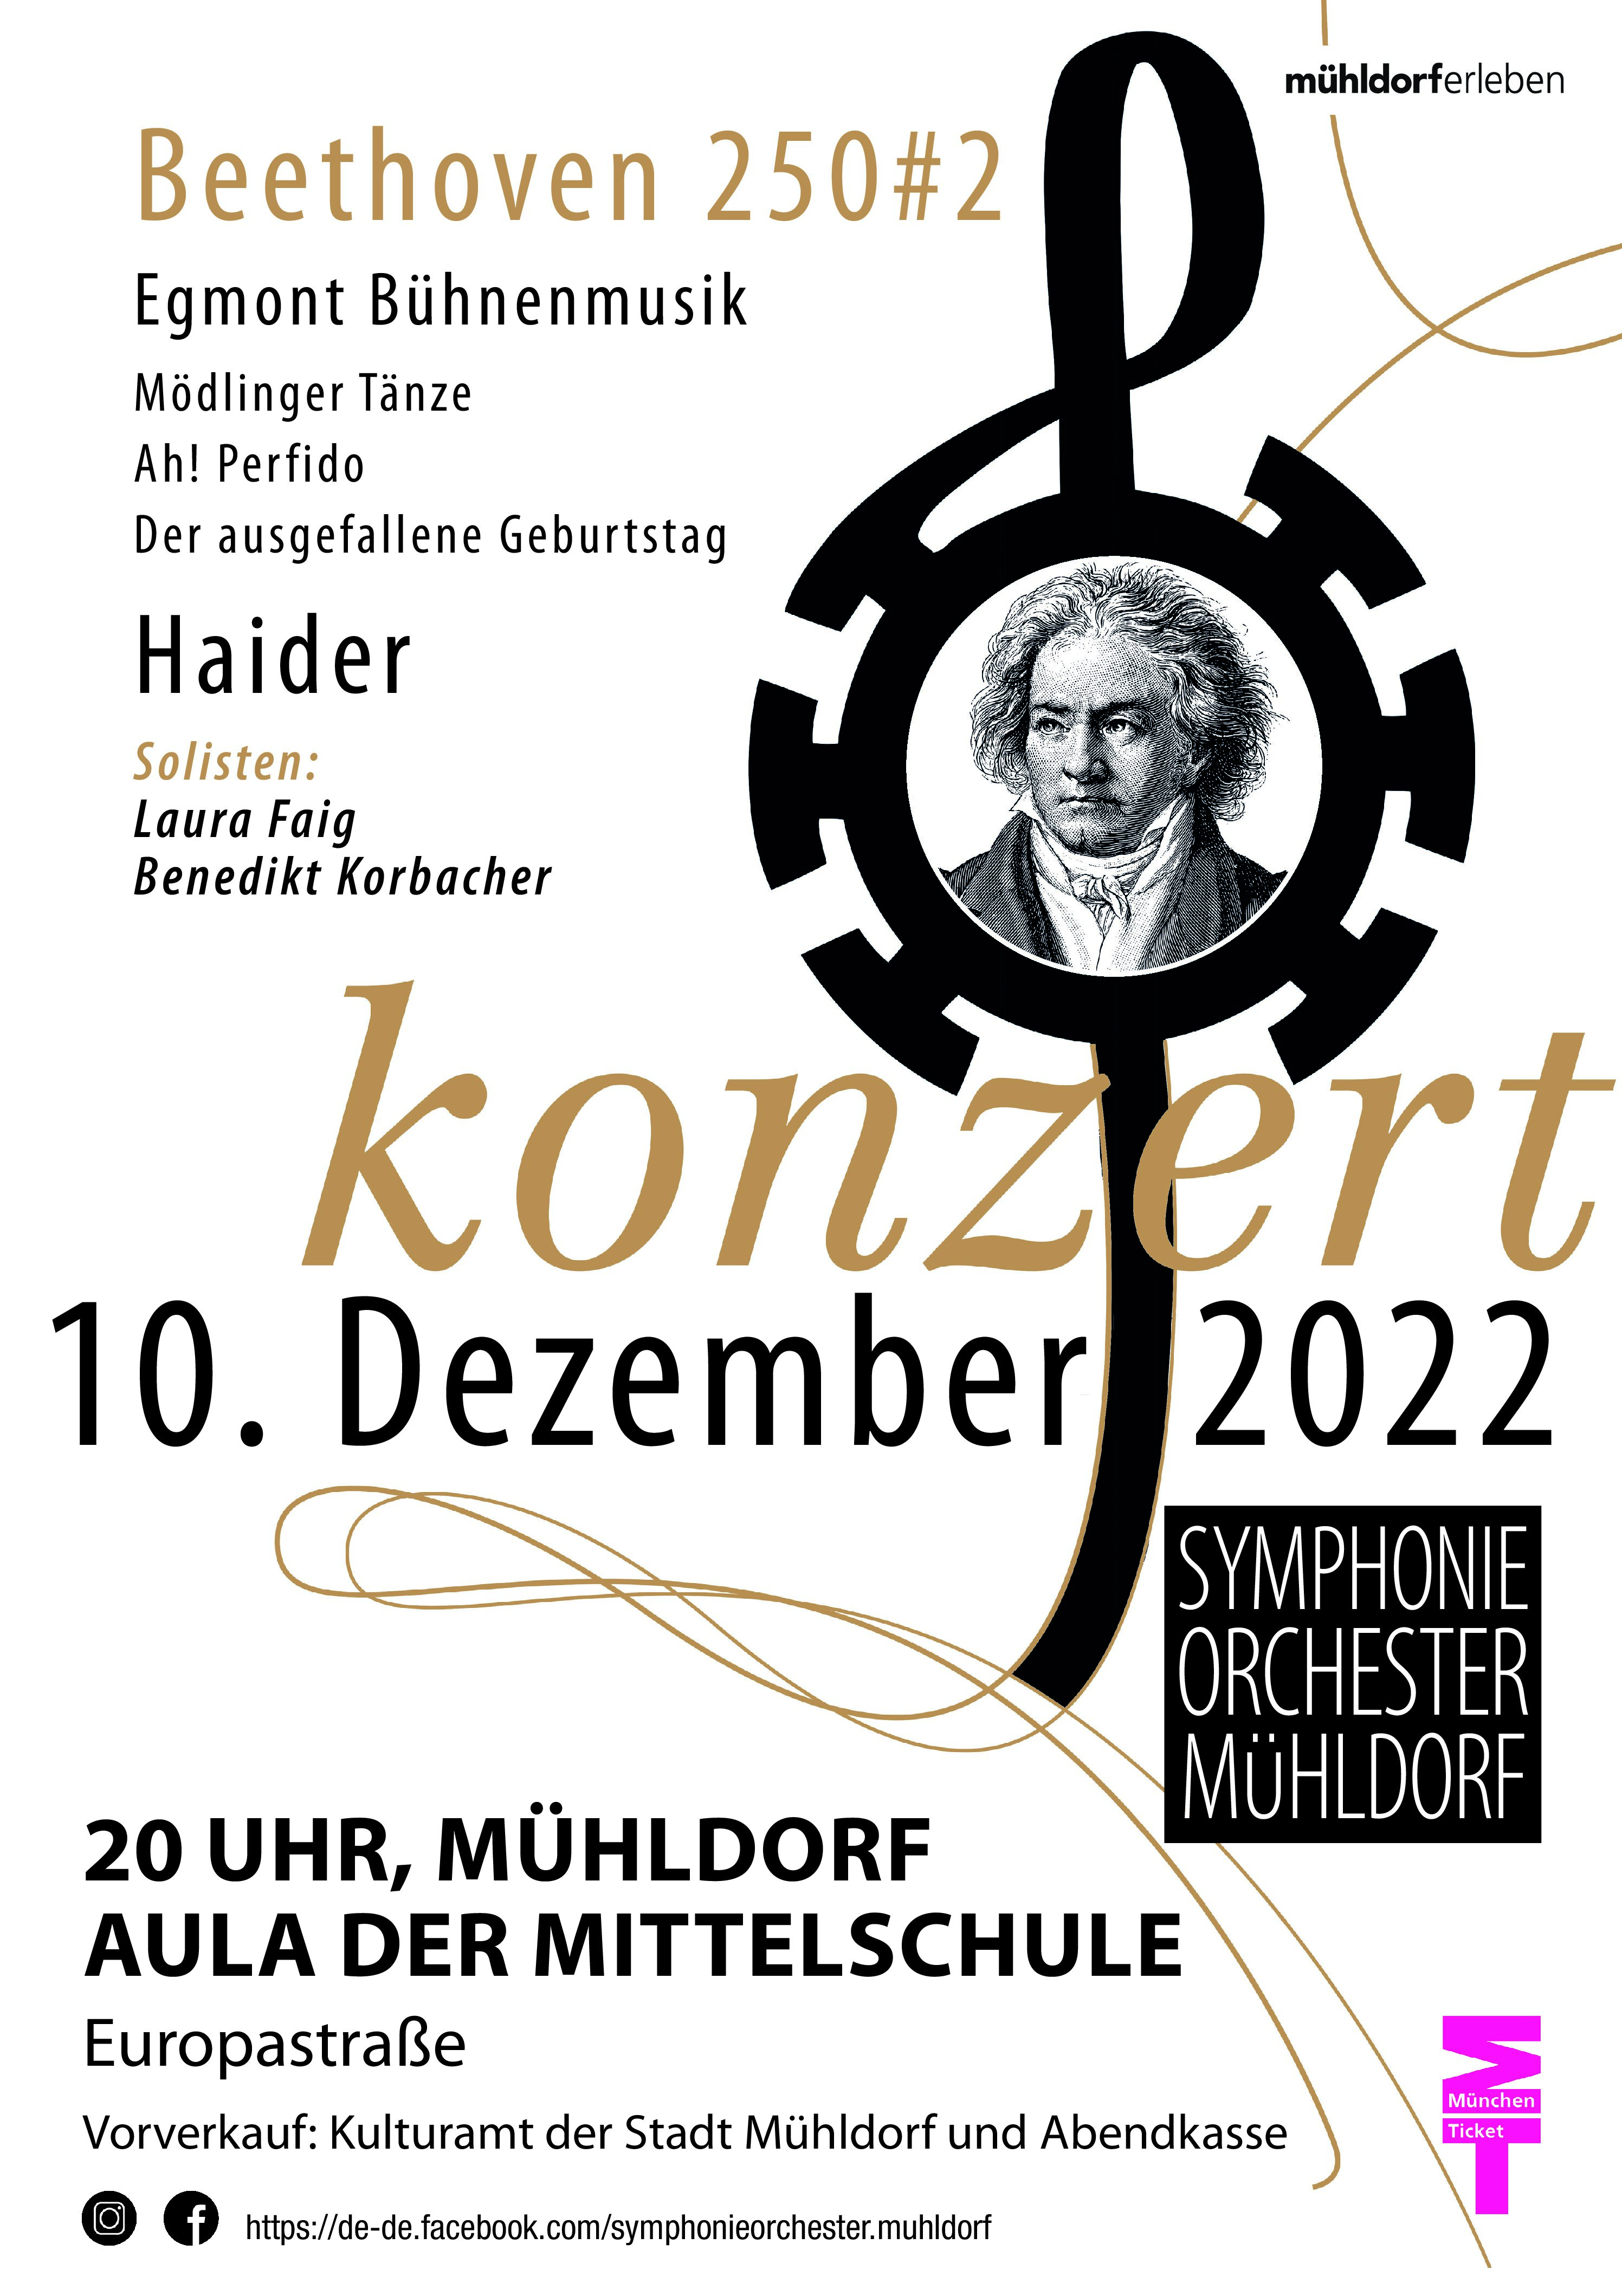 10. Dezember: Beethoven 250#2